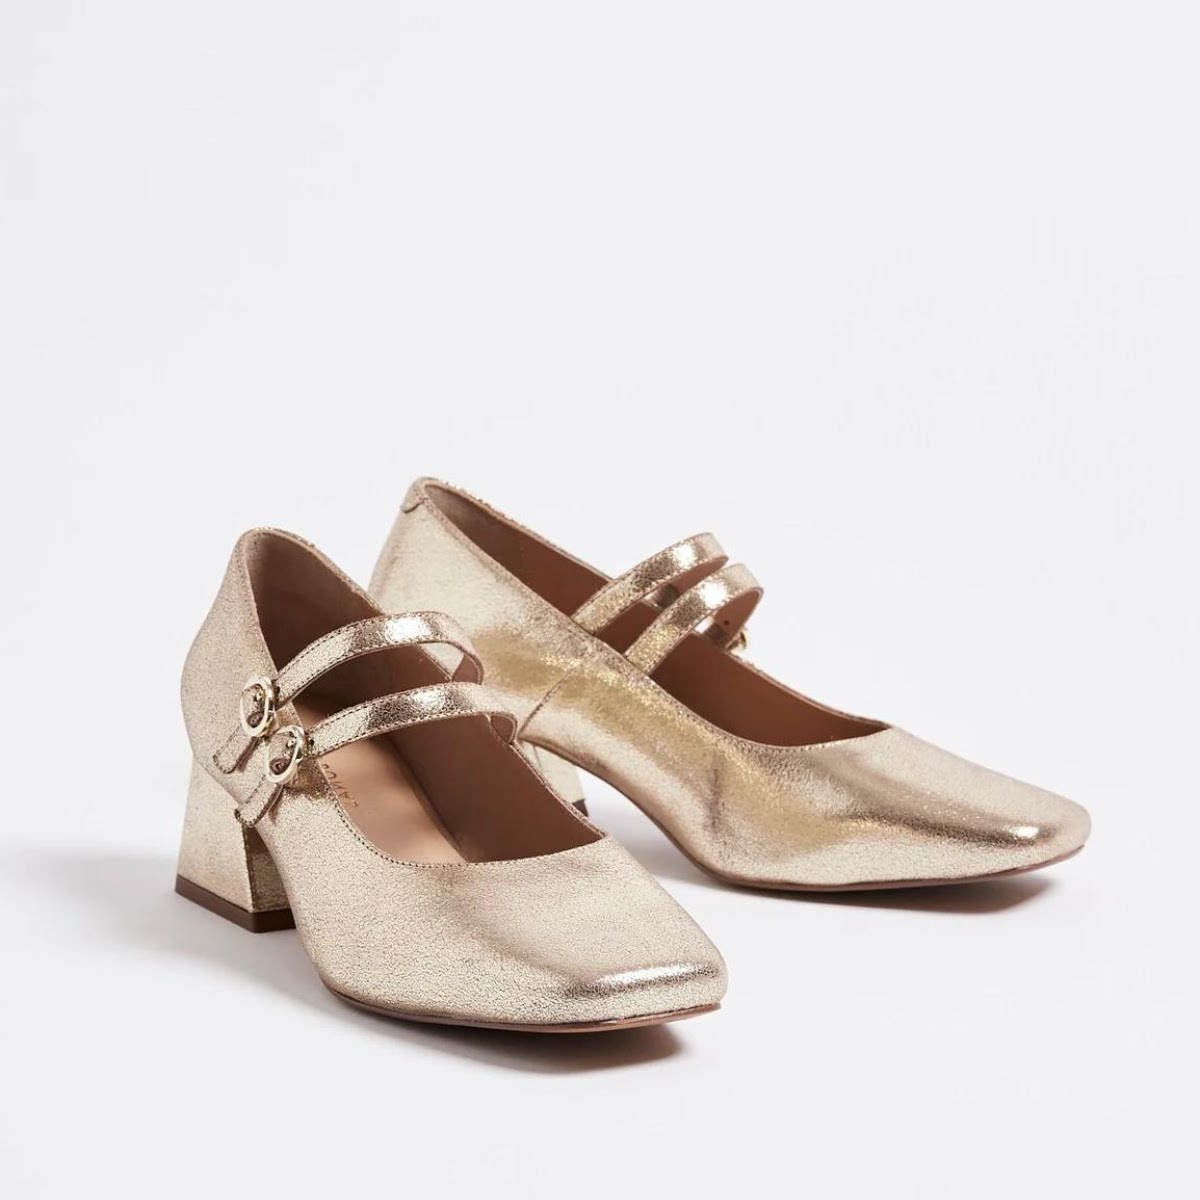 Mary Jane Gold Metallic Leather Flared Heeled Shoes, €115